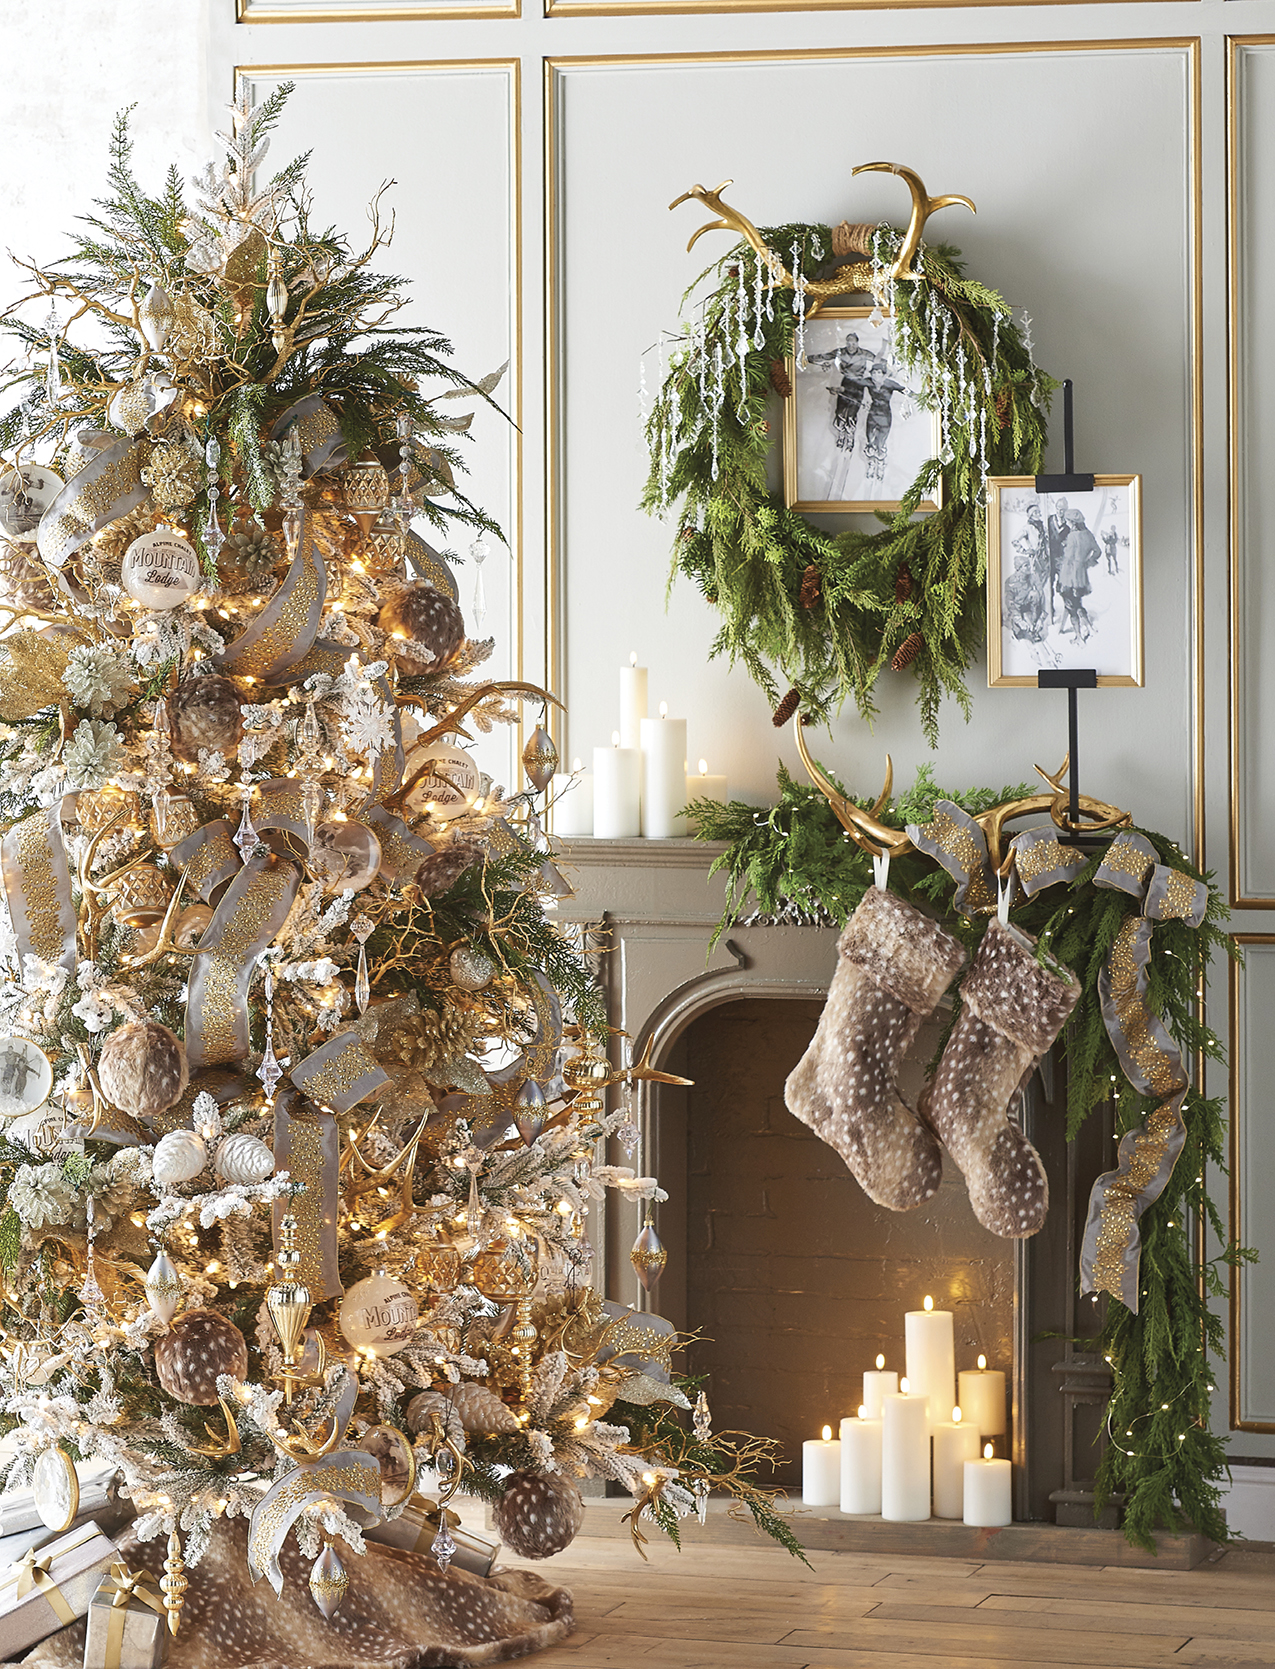 35+ Rustic Christmas Decorating Ideas 2021